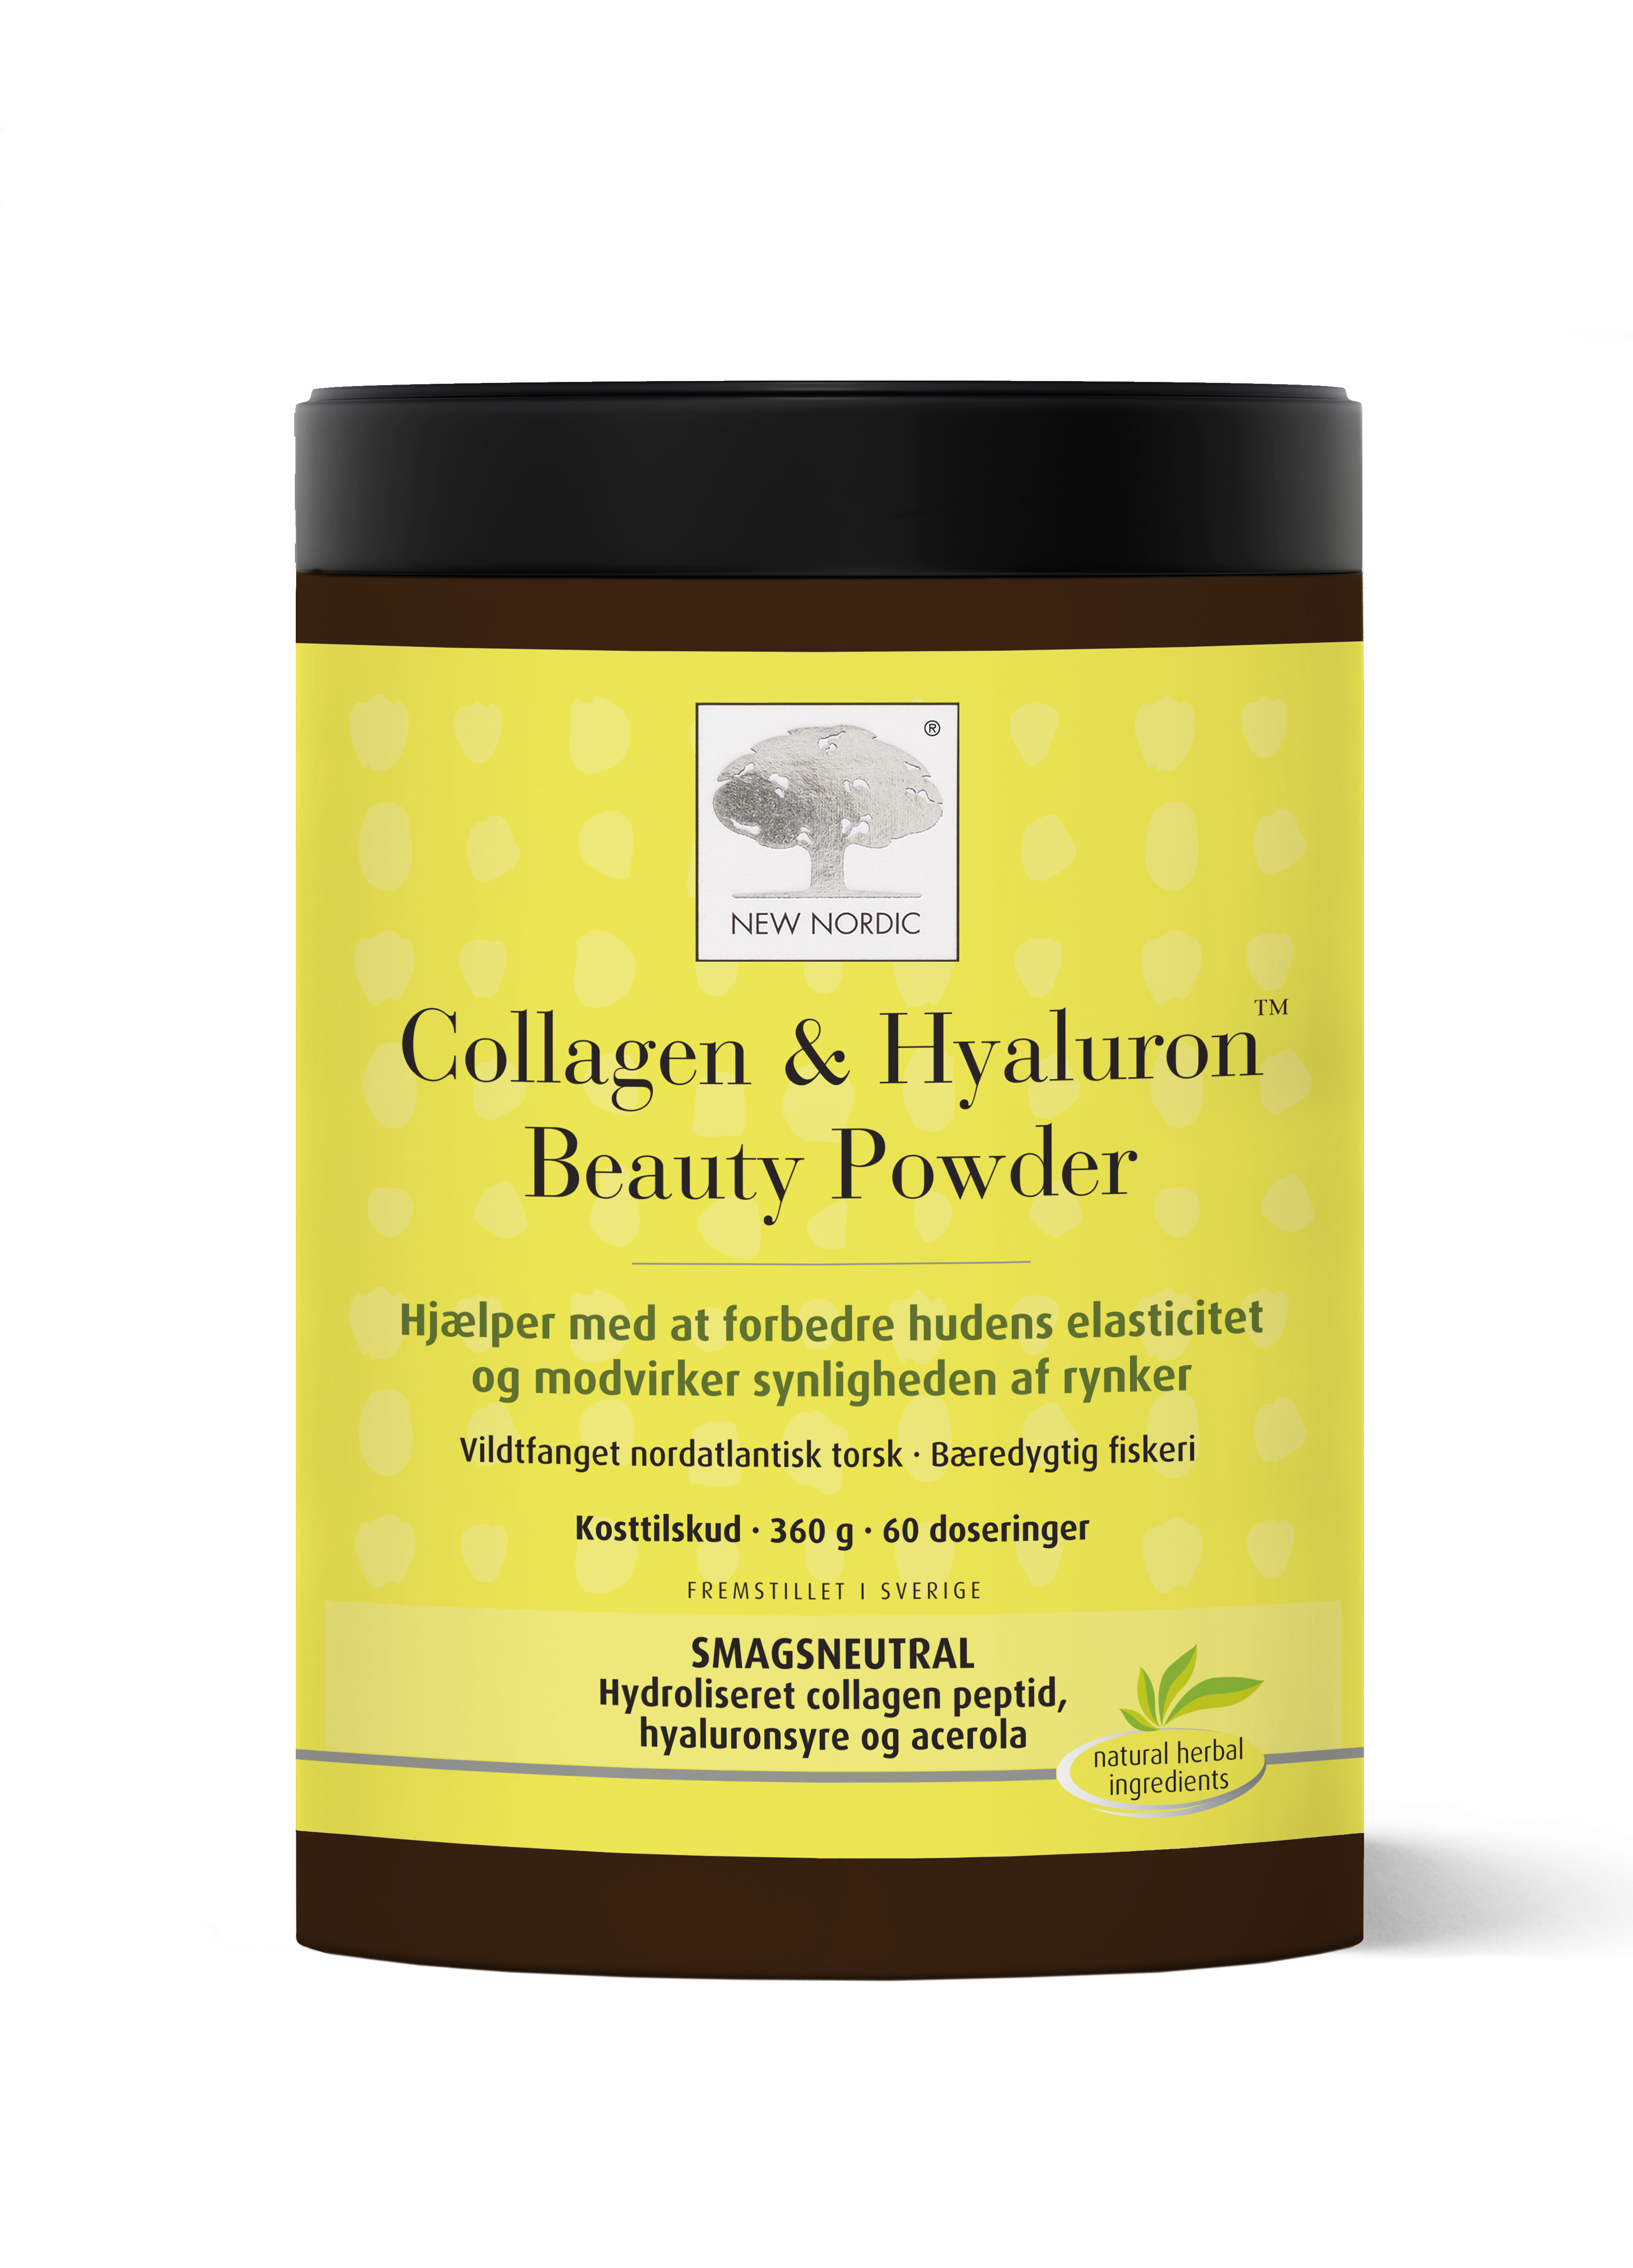 Se New Nordic Collagen & Hyaluron Beauty Powder 360g - 2 for 598,- hos Helsegrossisten.dk